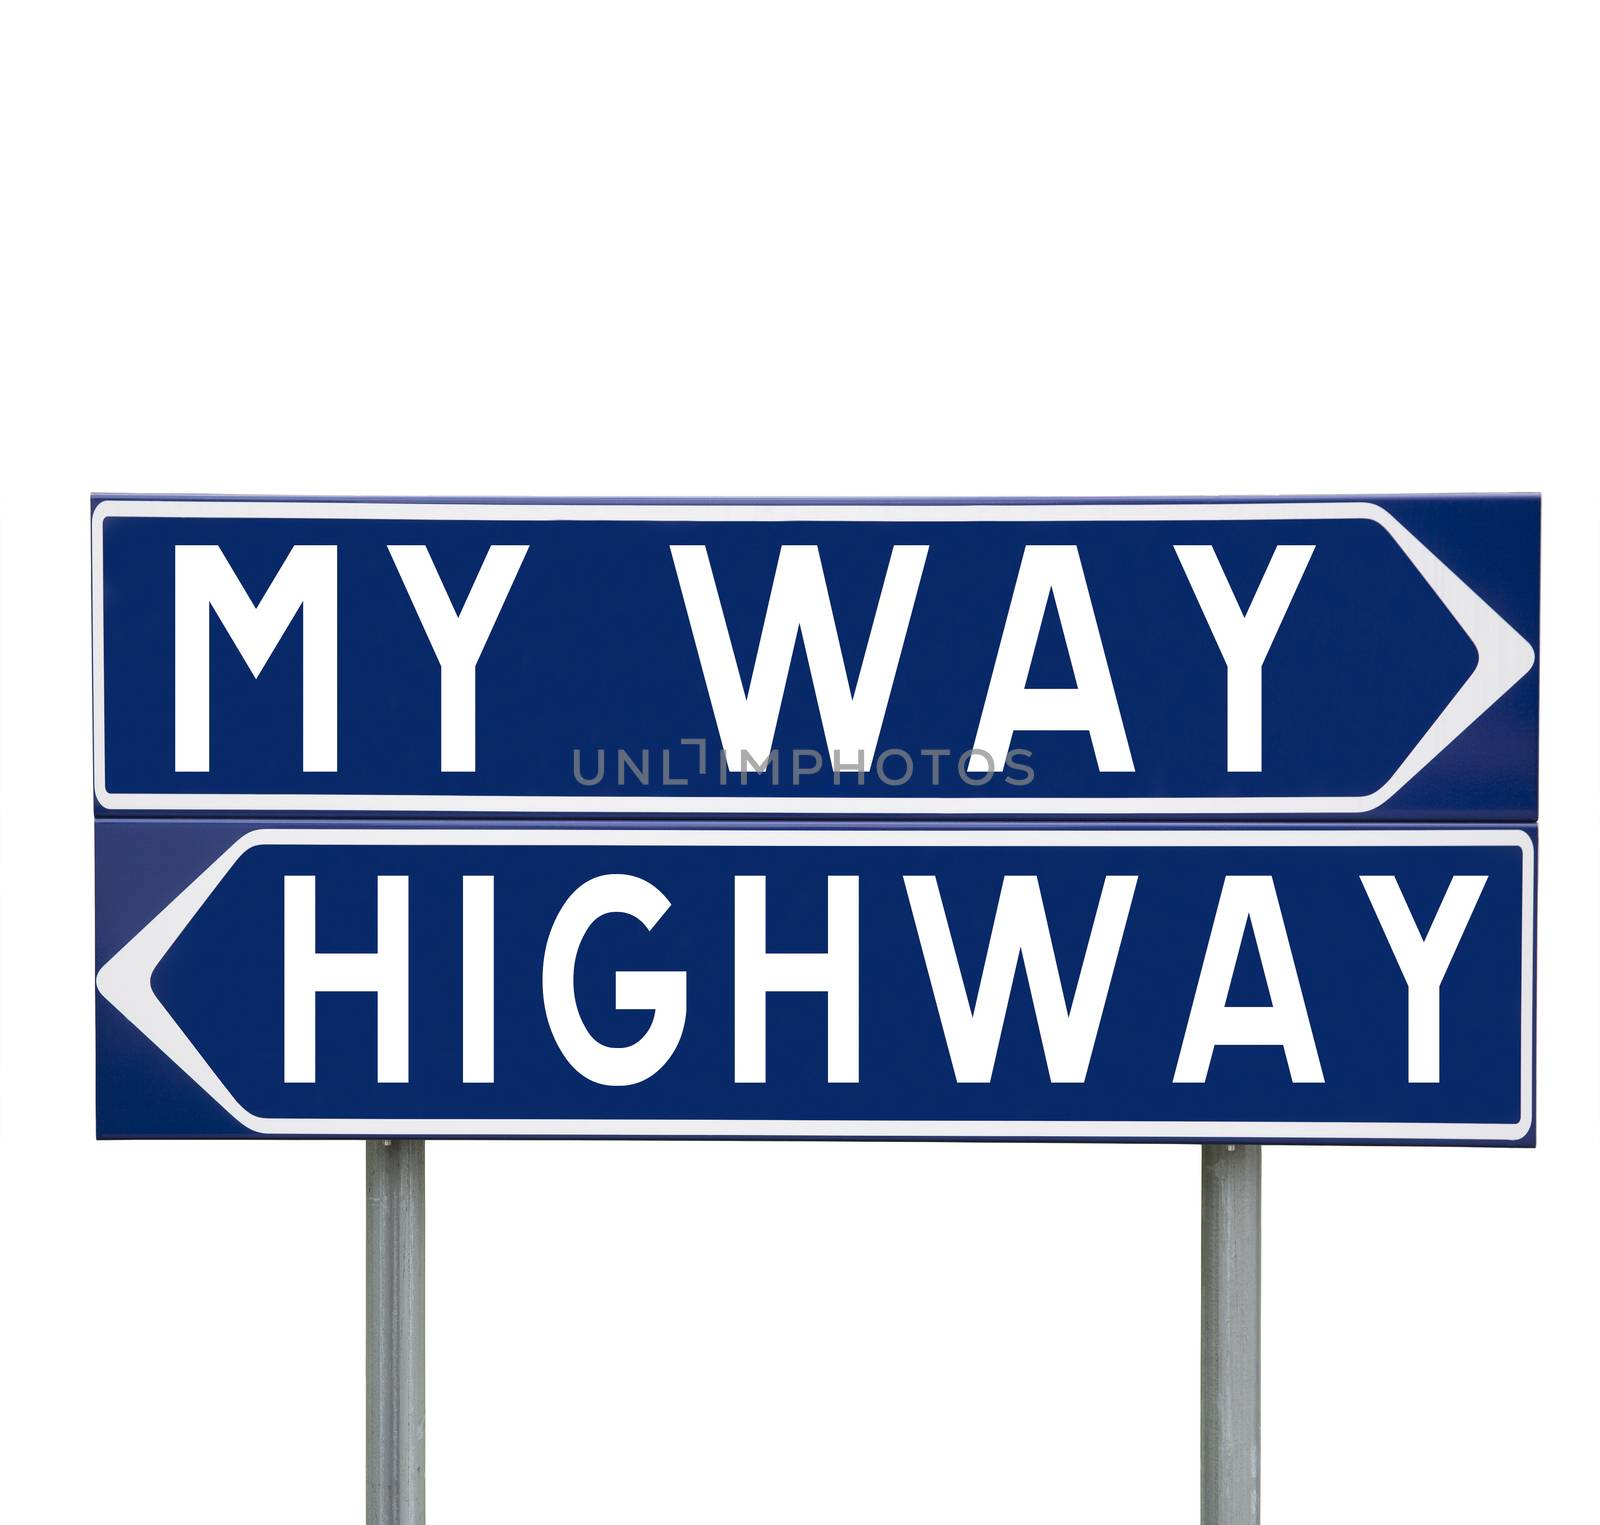 My Way or the Highway by gemenacom